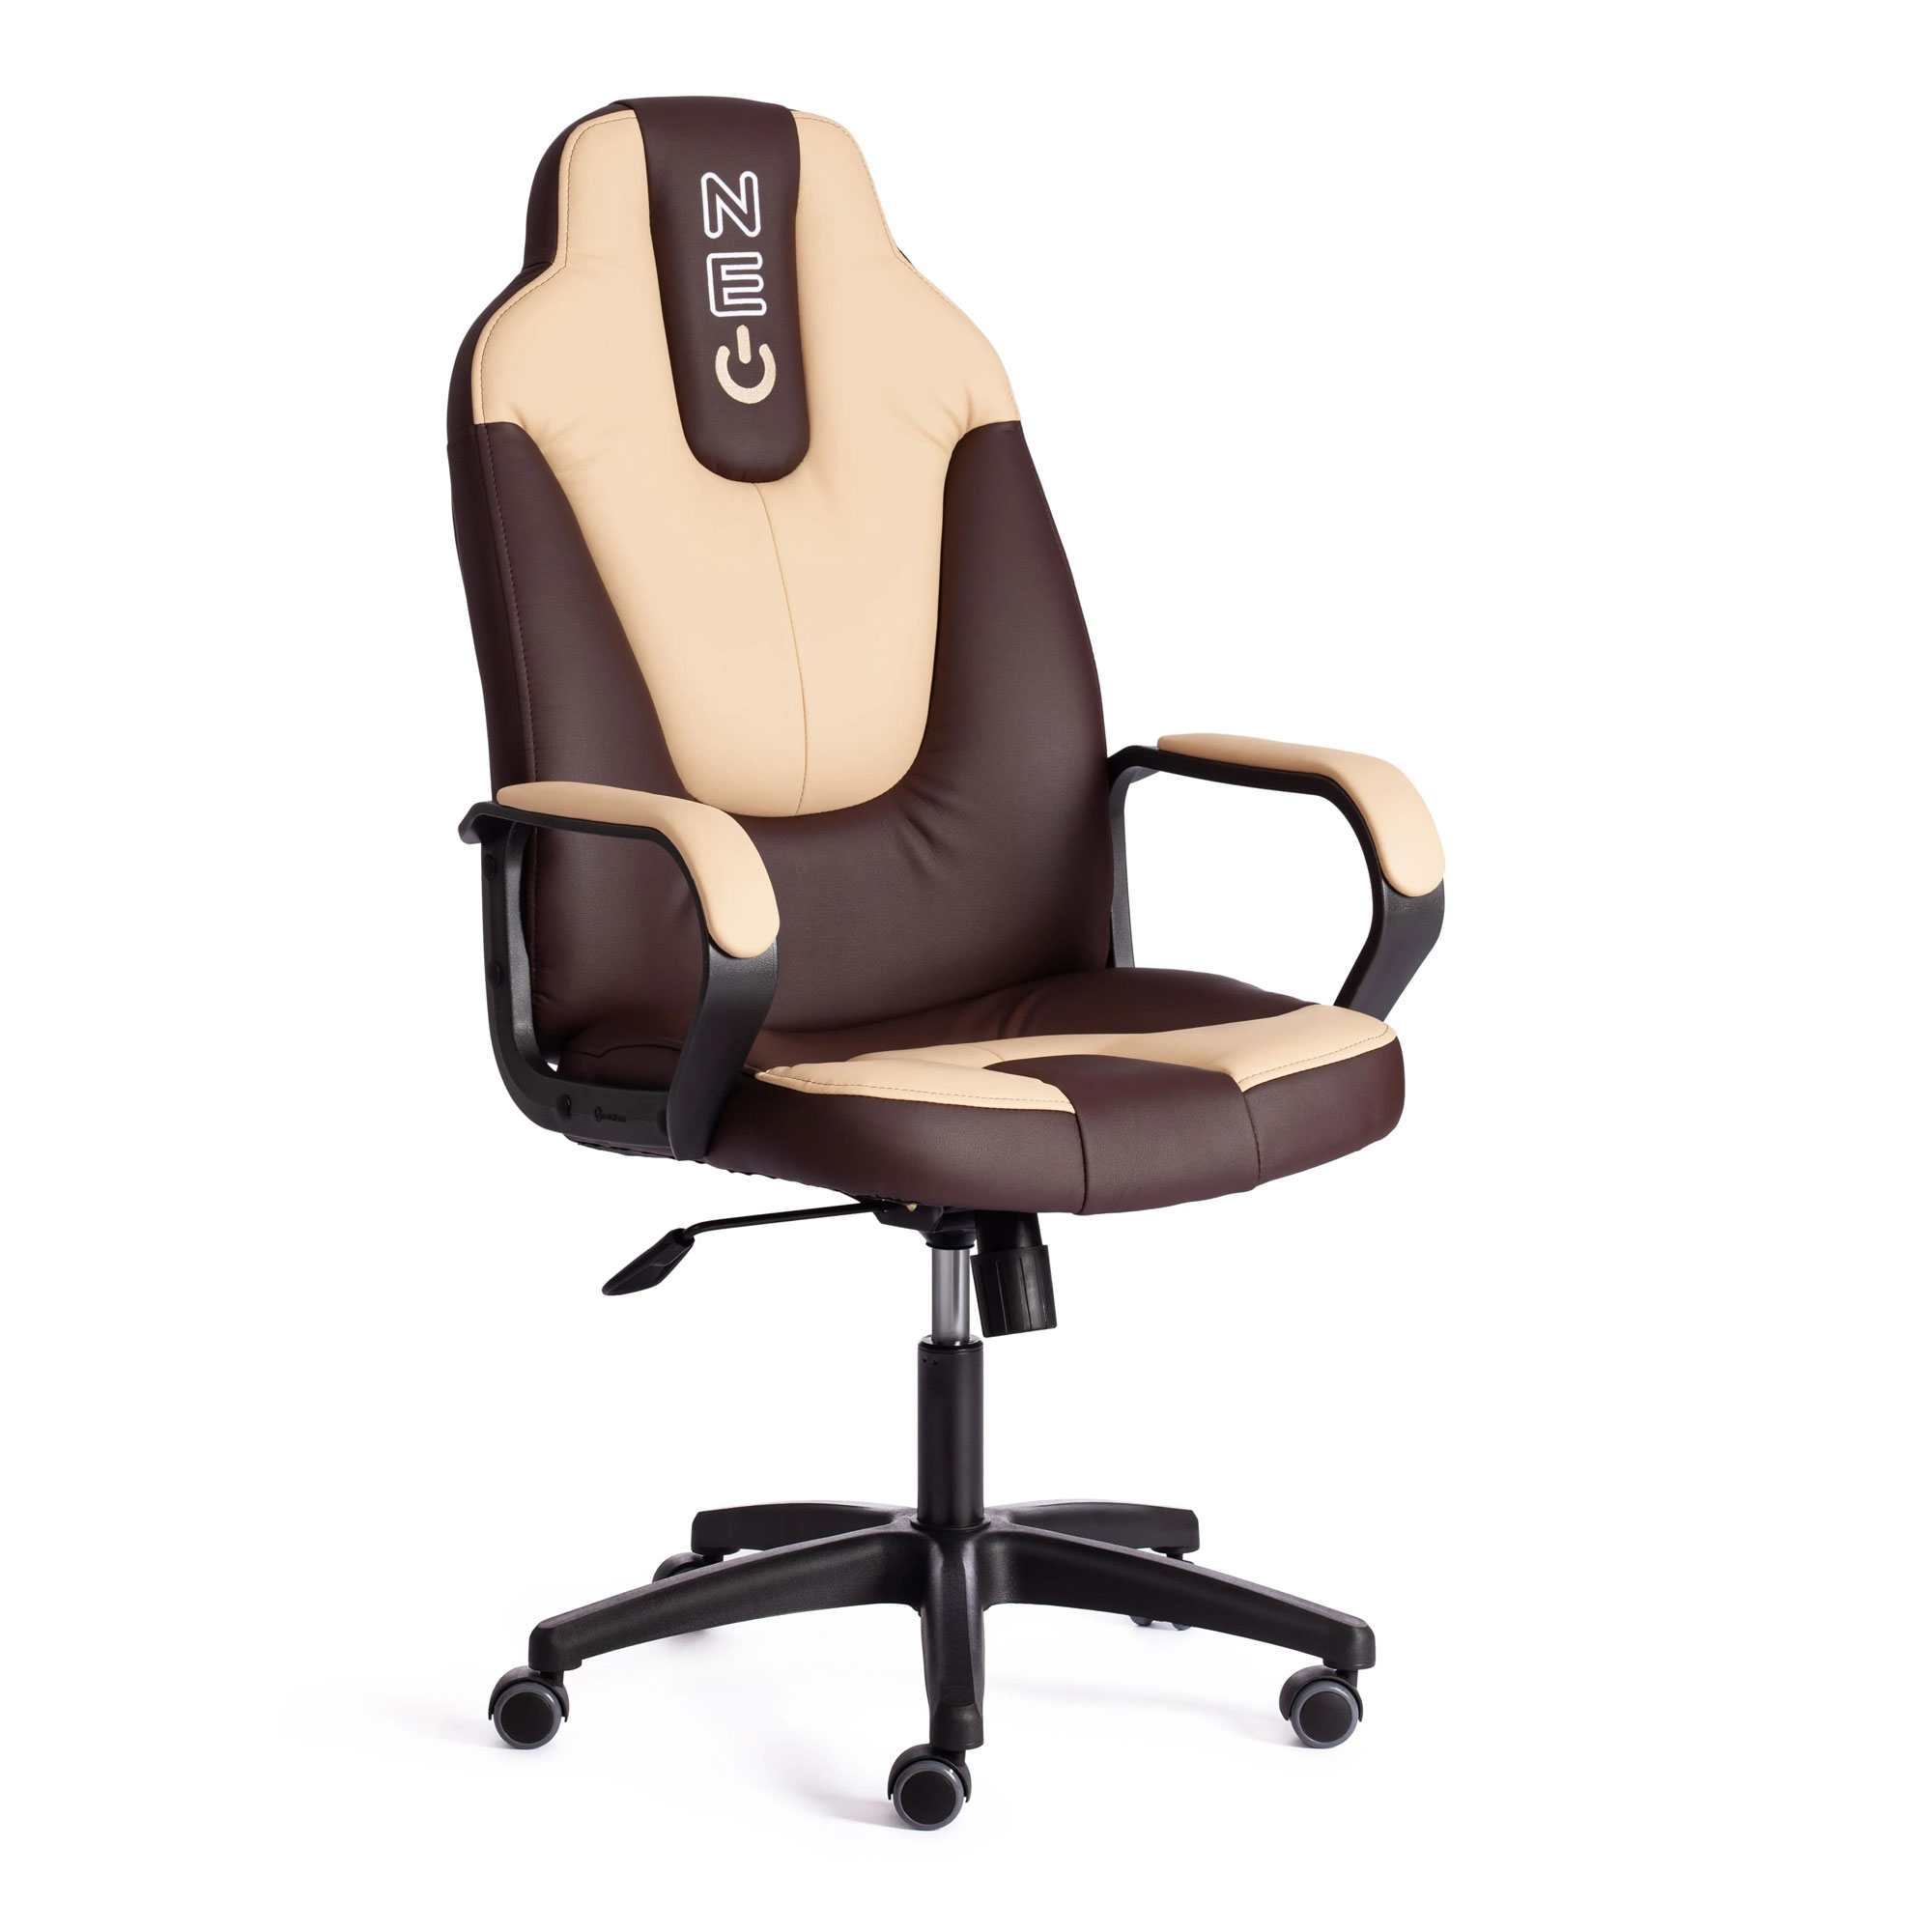 Кресло компьютерное TC Neo искусственная кожа коричневое с бежевым 64х49х122 см кресло компьютерное tc neo искусственная кожа коричневое с бежевым 64х49х122 см